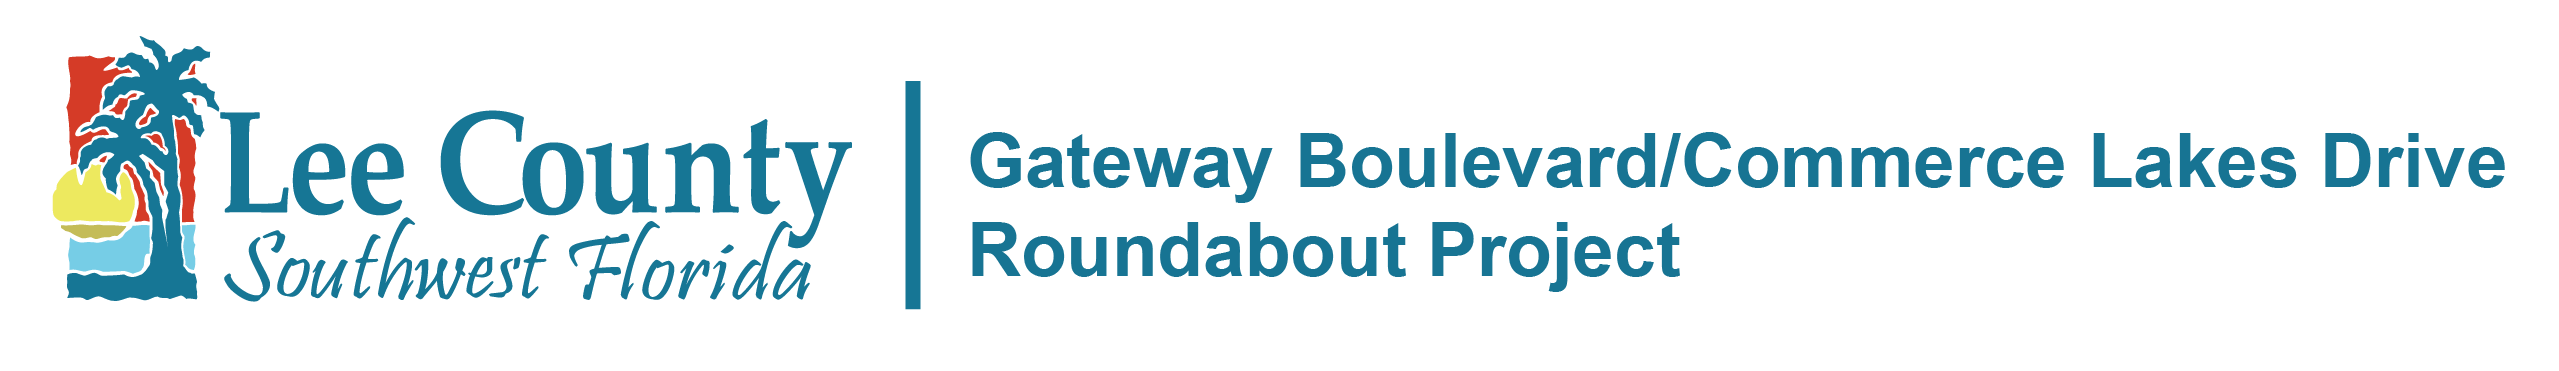 Gateway Boulevard/Commerce Lakes Drive Roundabout Project